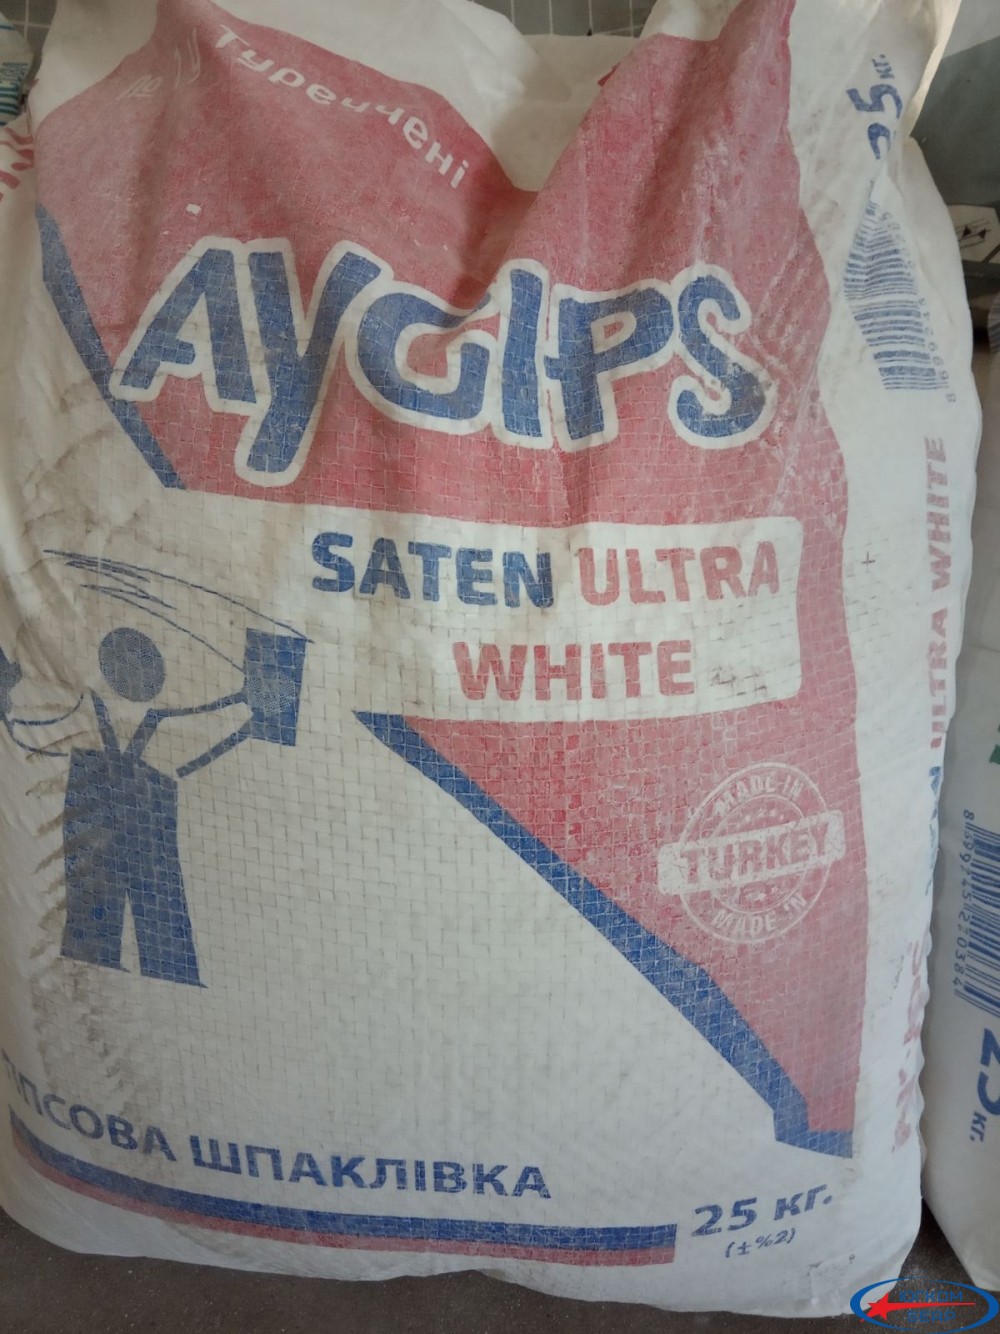 Aygips Saten Ultra White Финиш 25 кг